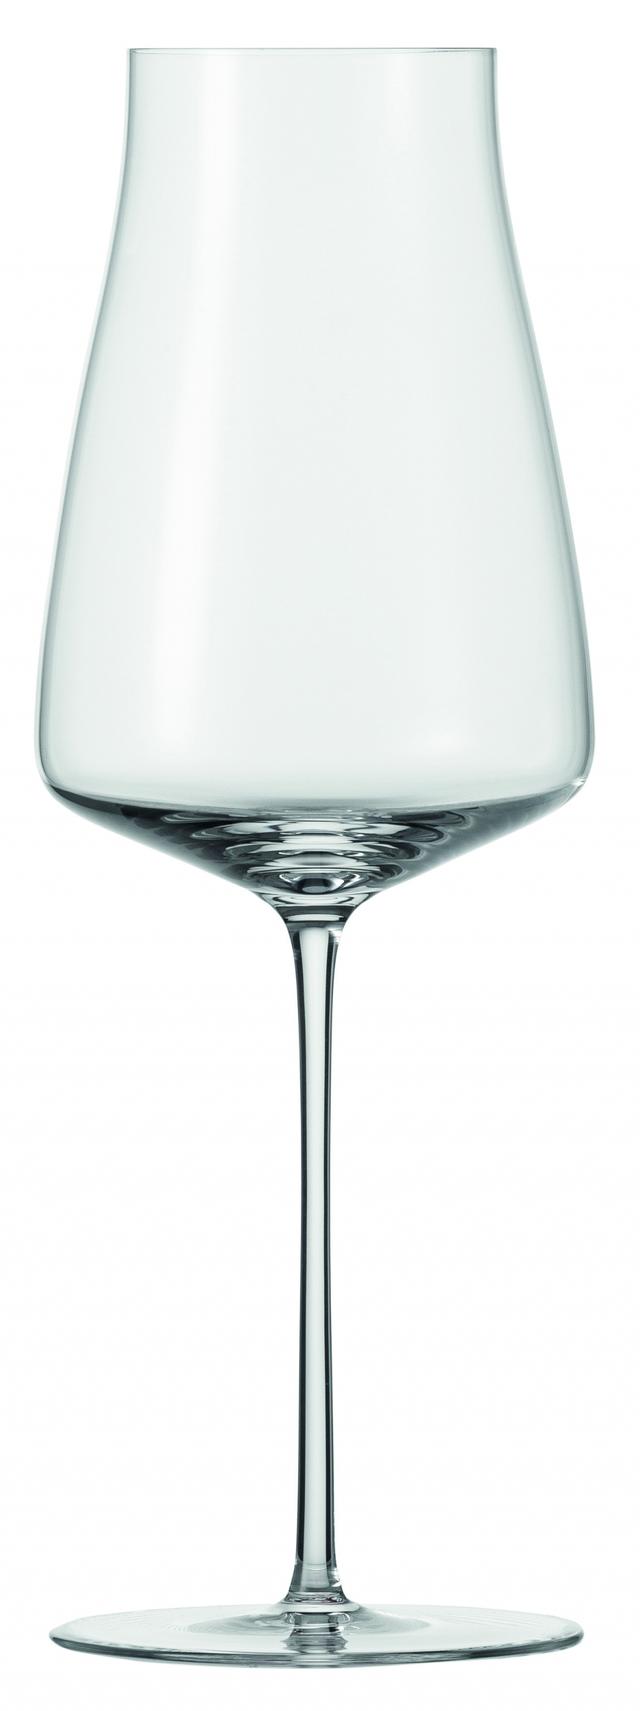 zwiesel glas wine classics select sauvignon blanc wijnglas 123 - 0.402ltr